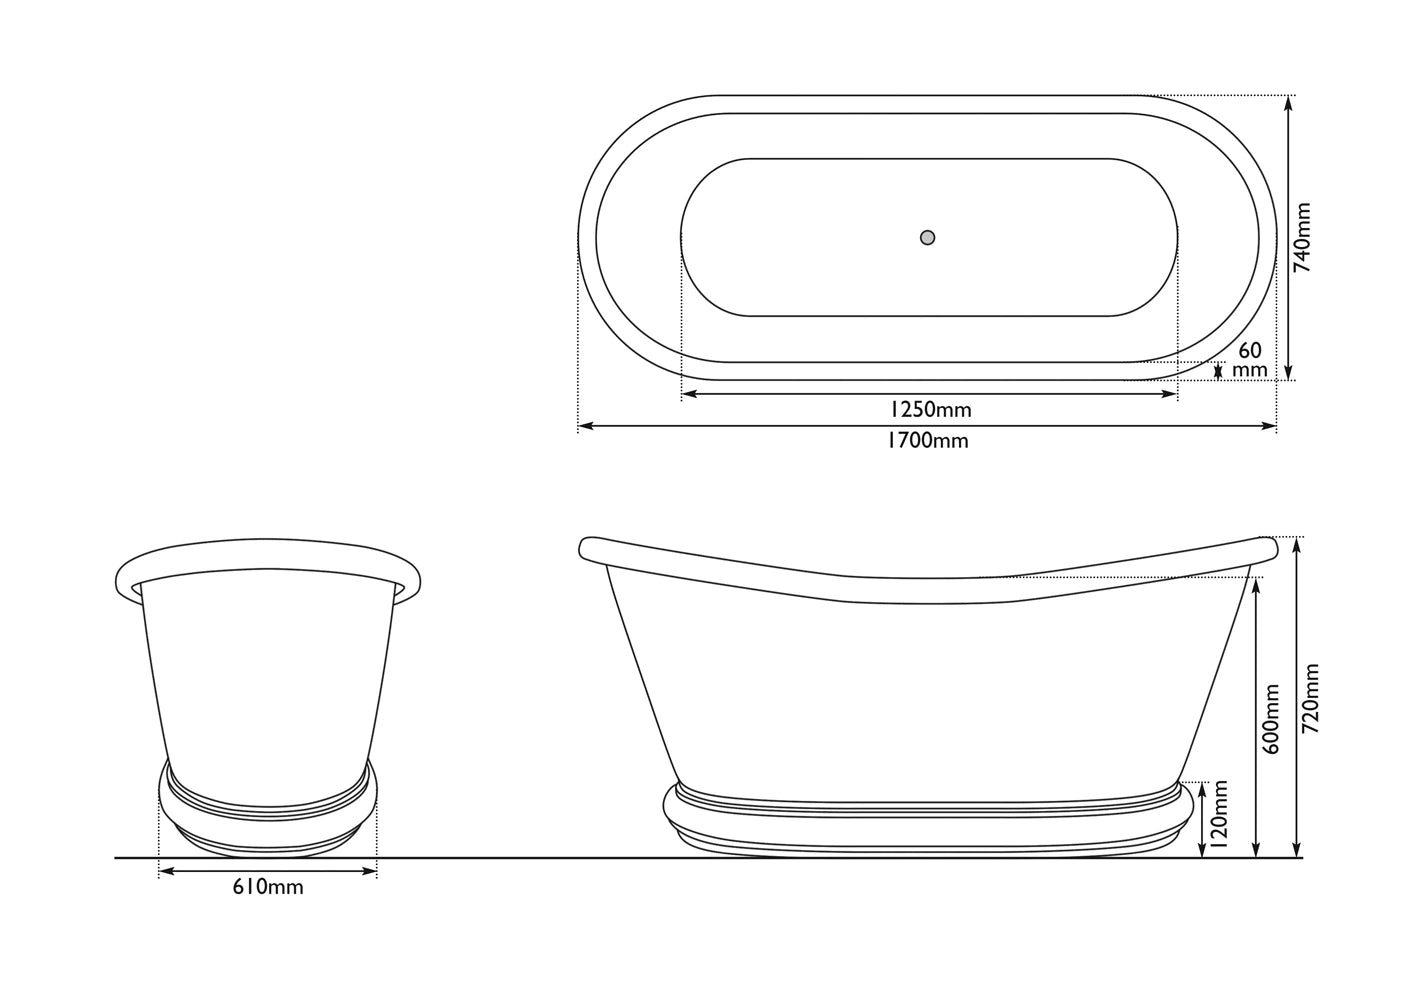 Hurlingham Bulle Copper-Nickel Bath, Freestanding Roll Top Bathtub in length 1700mm for luxury bathroom, dimension drawing specification SS057